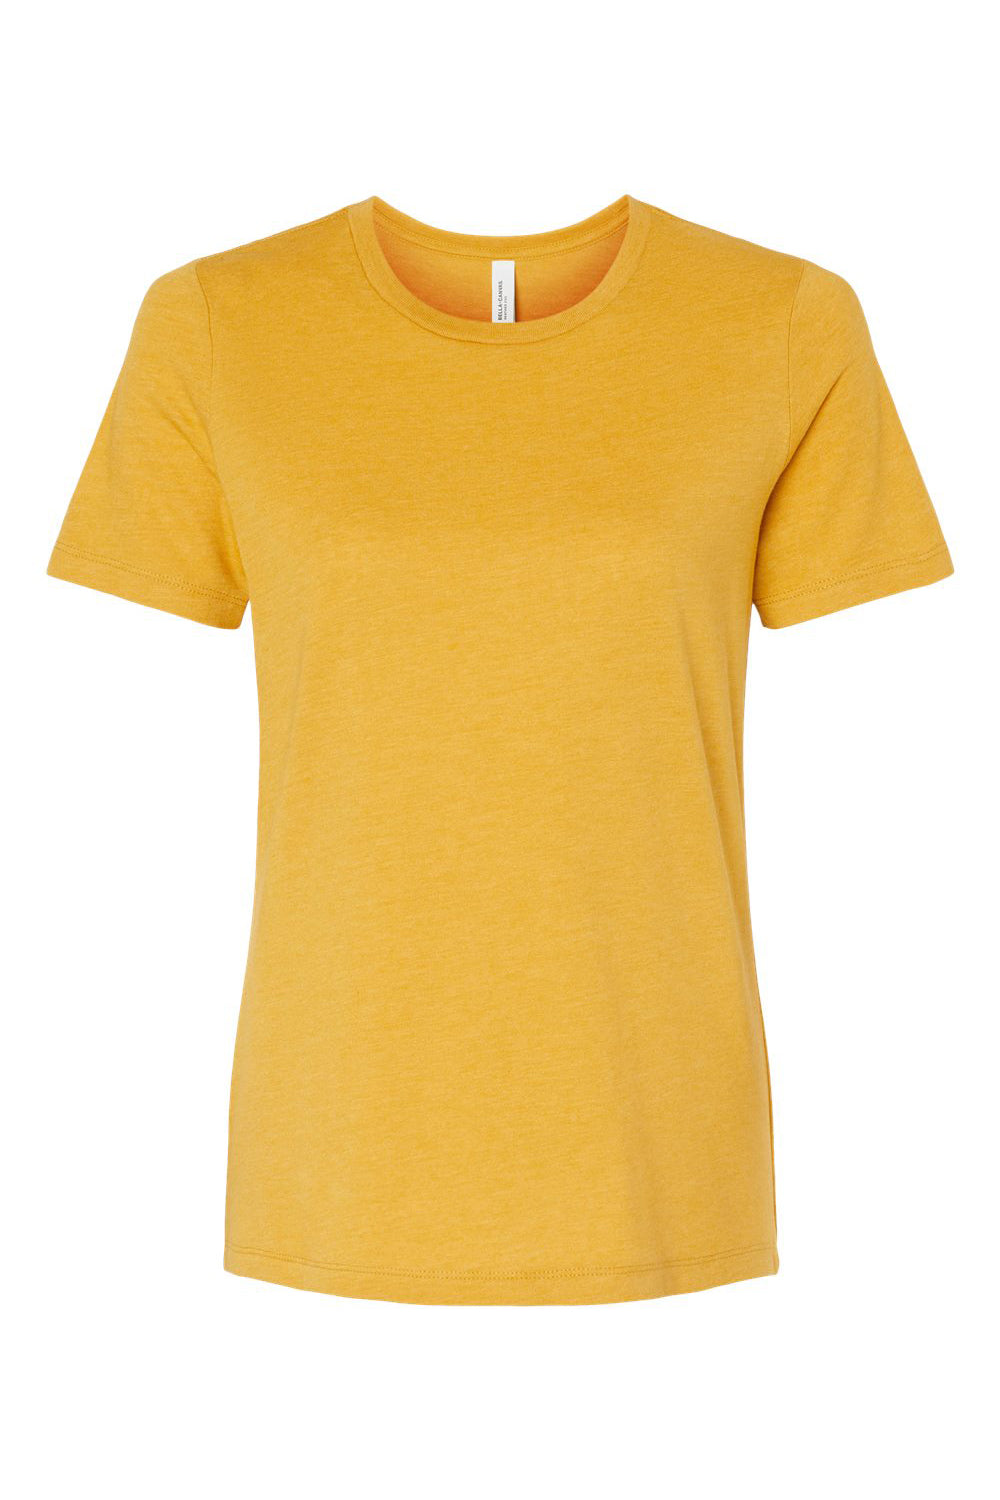 Bella + Canvas BC6400CVC/6400CVC Womens CVC Short Sleeve Crewneck T-Shirt Heather Mustard Yellow Flat Front